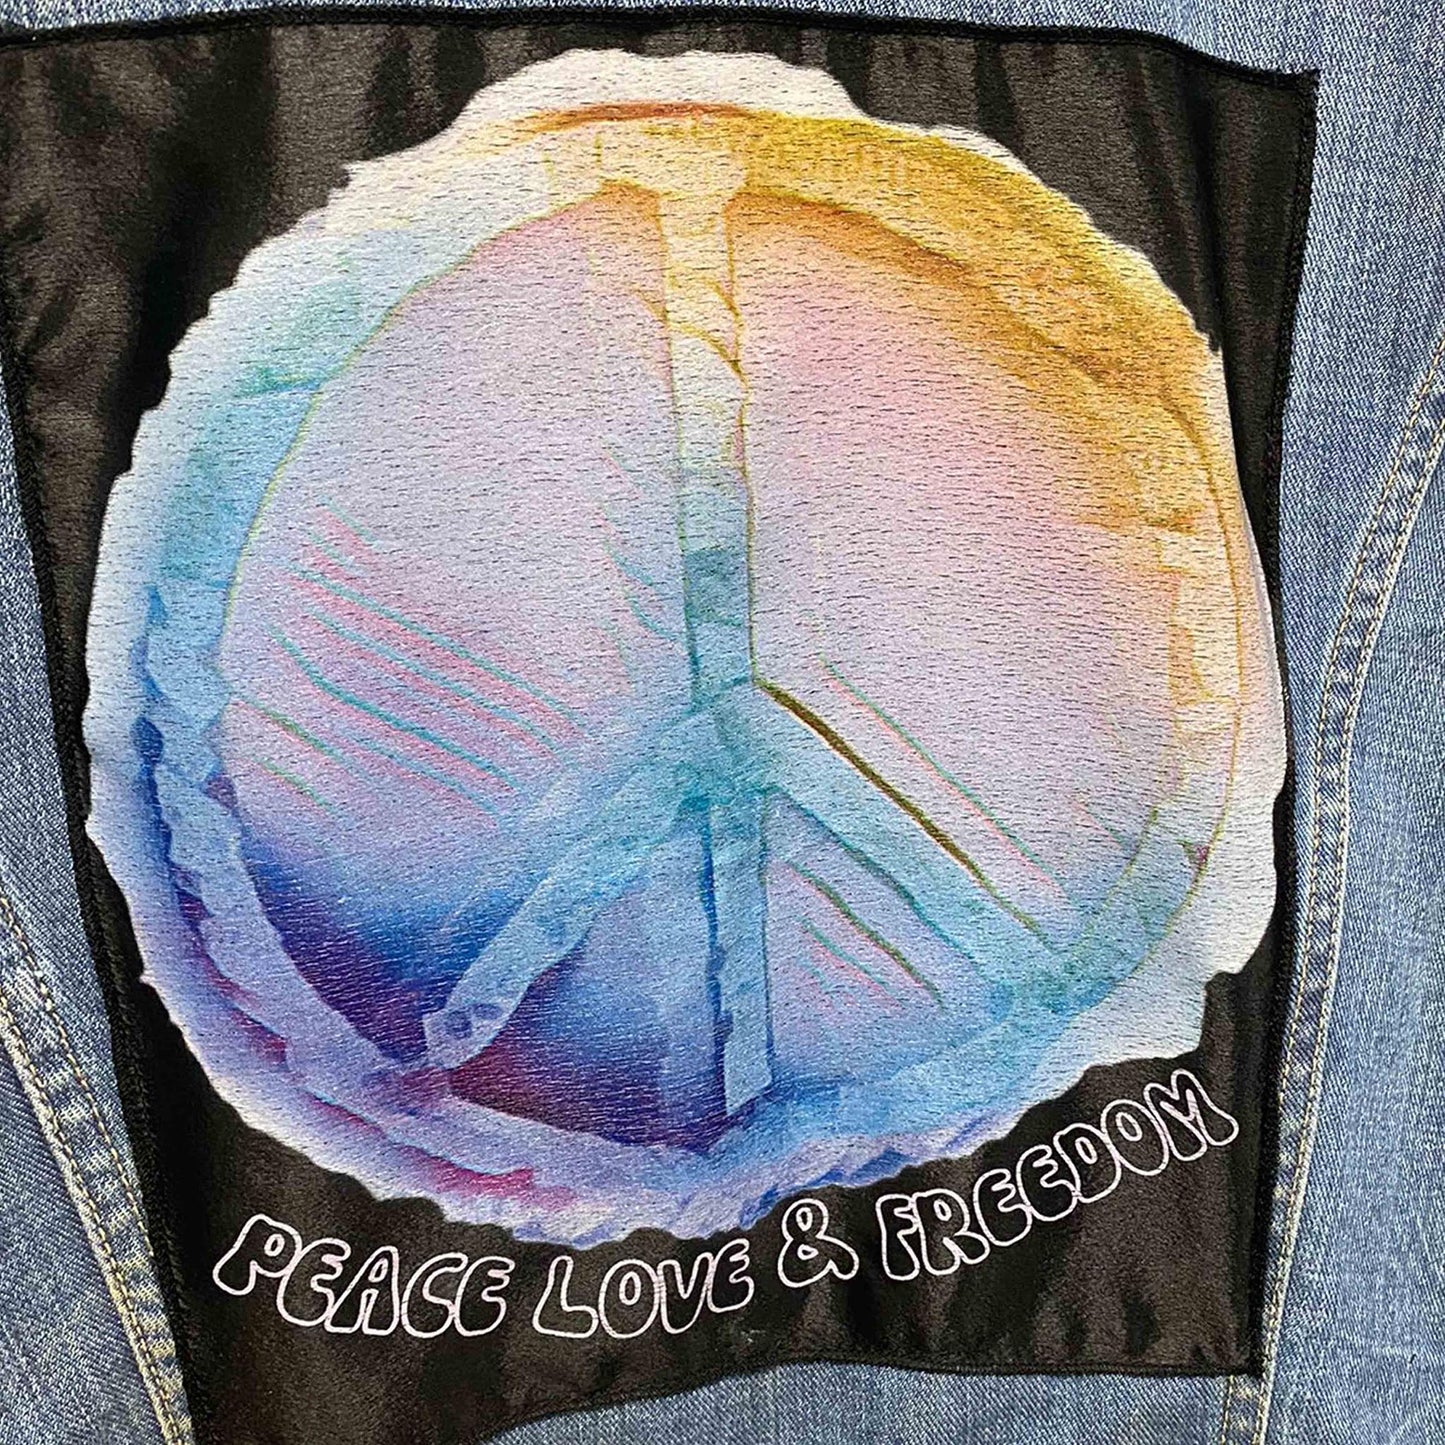 Upcycled Vintage Denim Jacket "Peace, Love & Freedom"